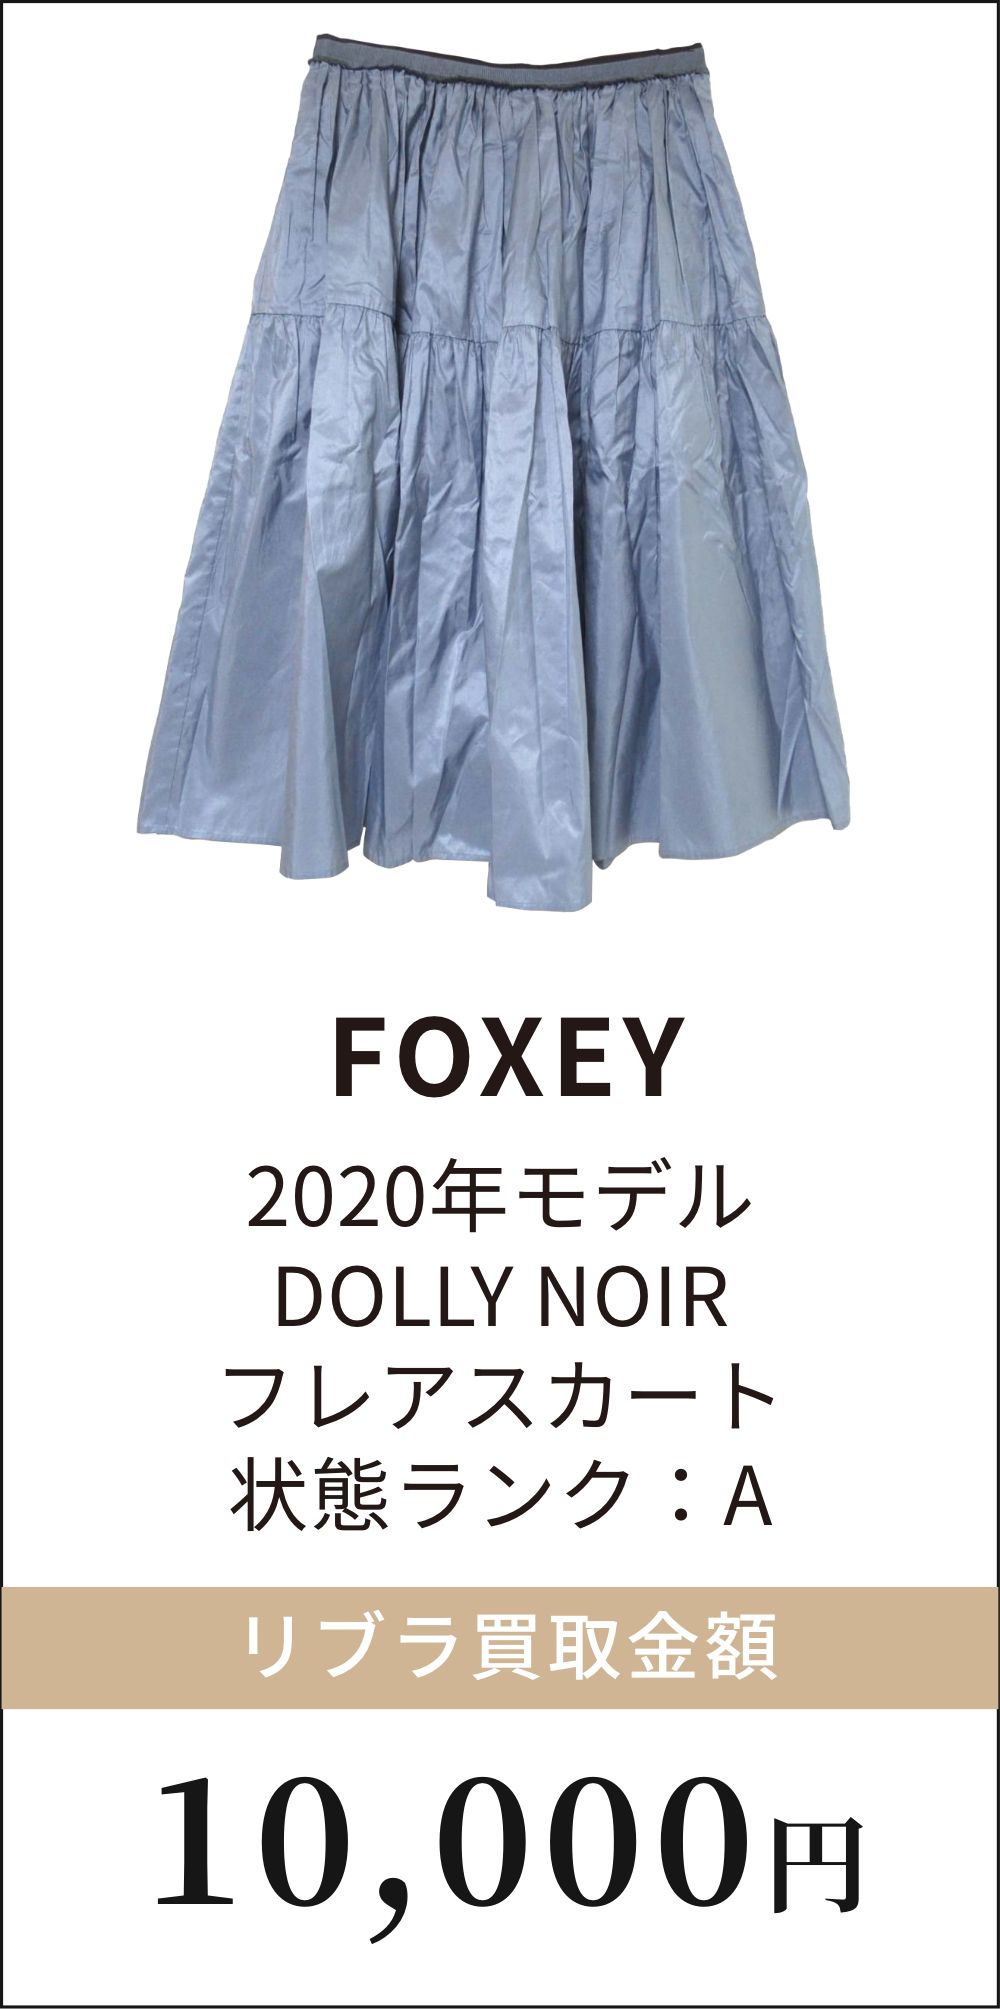 FOXEY 2020年モデル　DOLLY NOIR フレアスカート